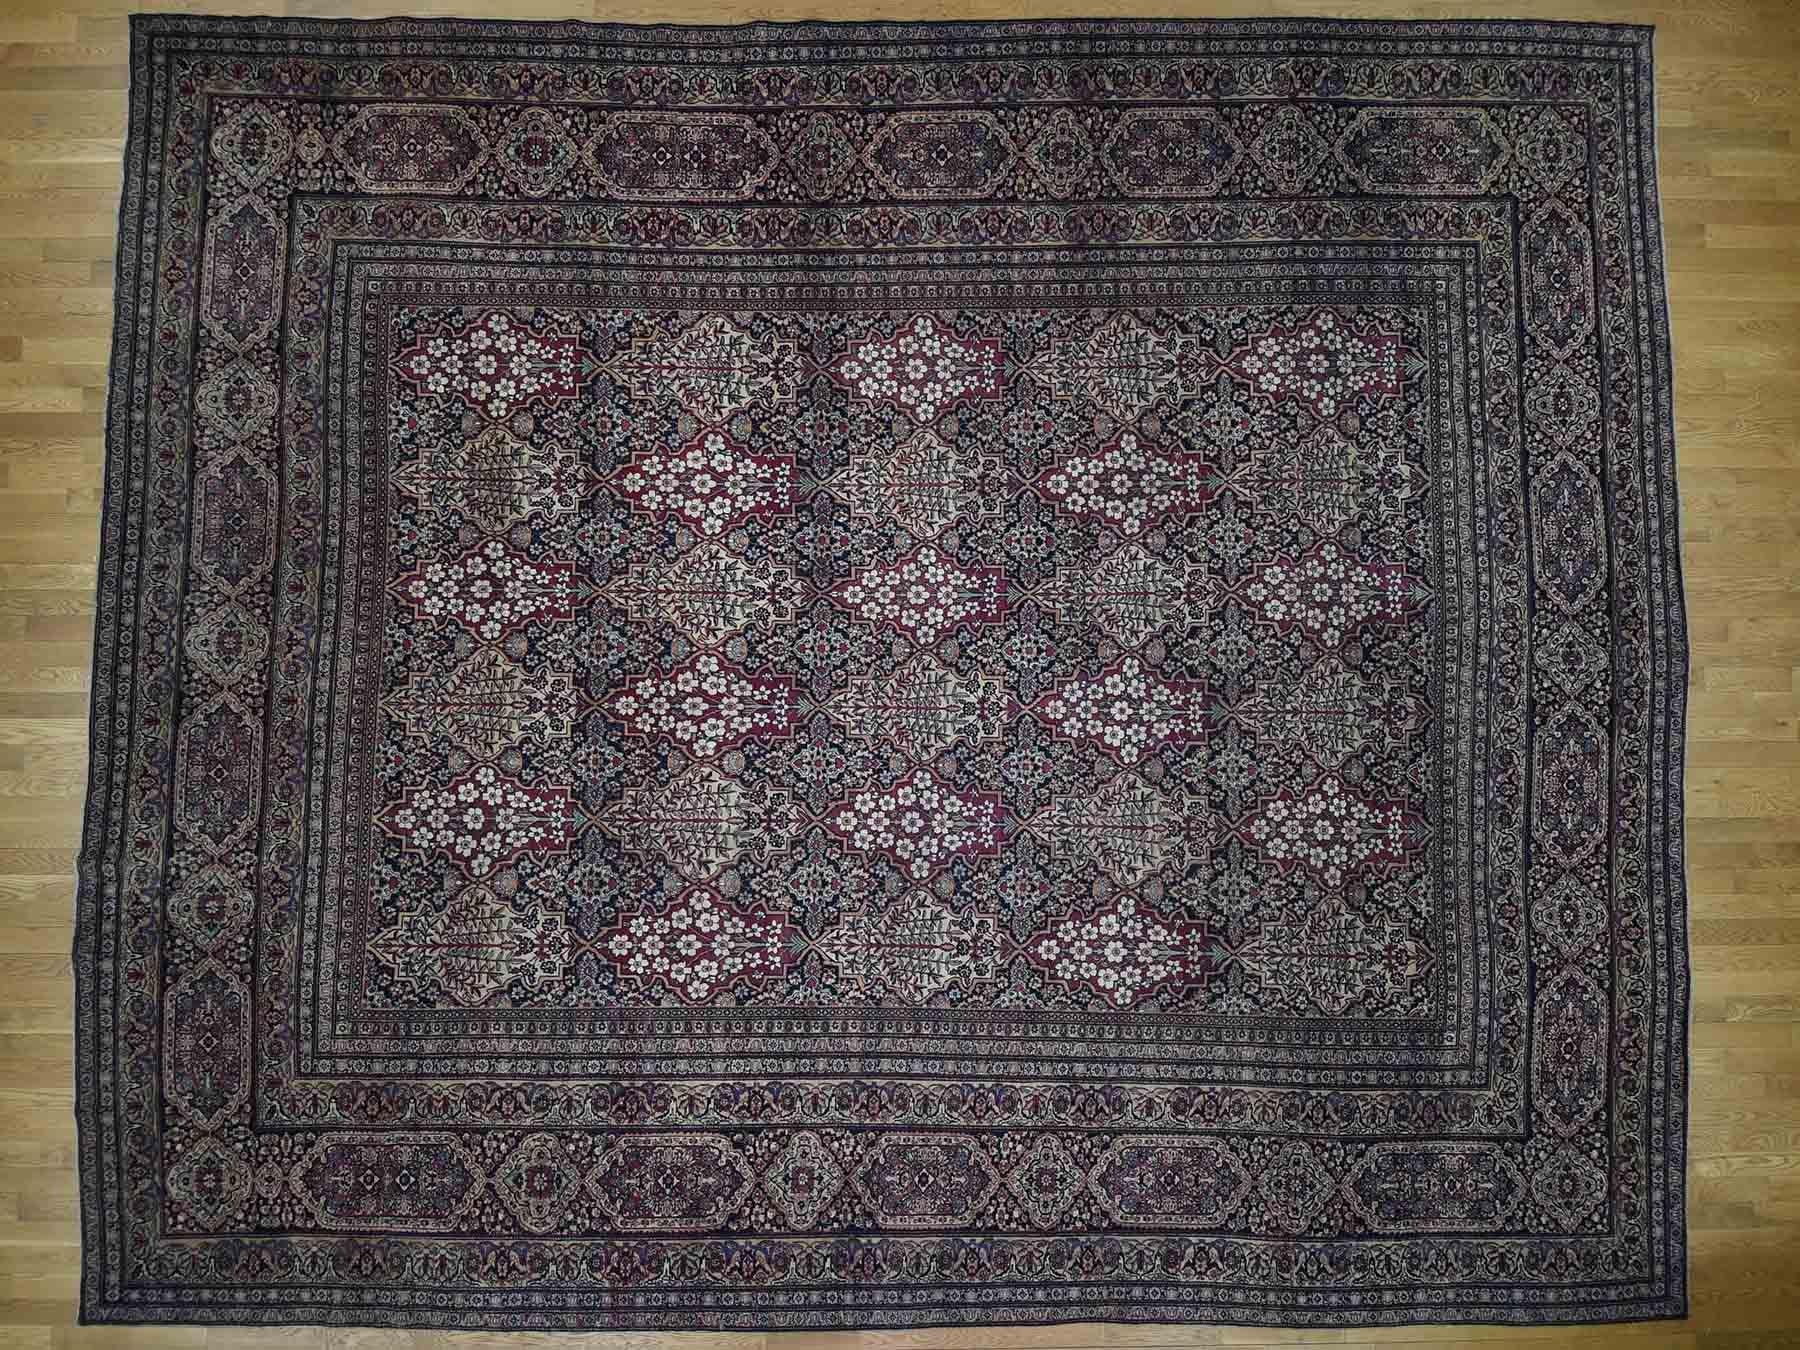 Wool 1890 Antique Persian Kermanshah Rug, Even Wear, Majestic Garden For Sale